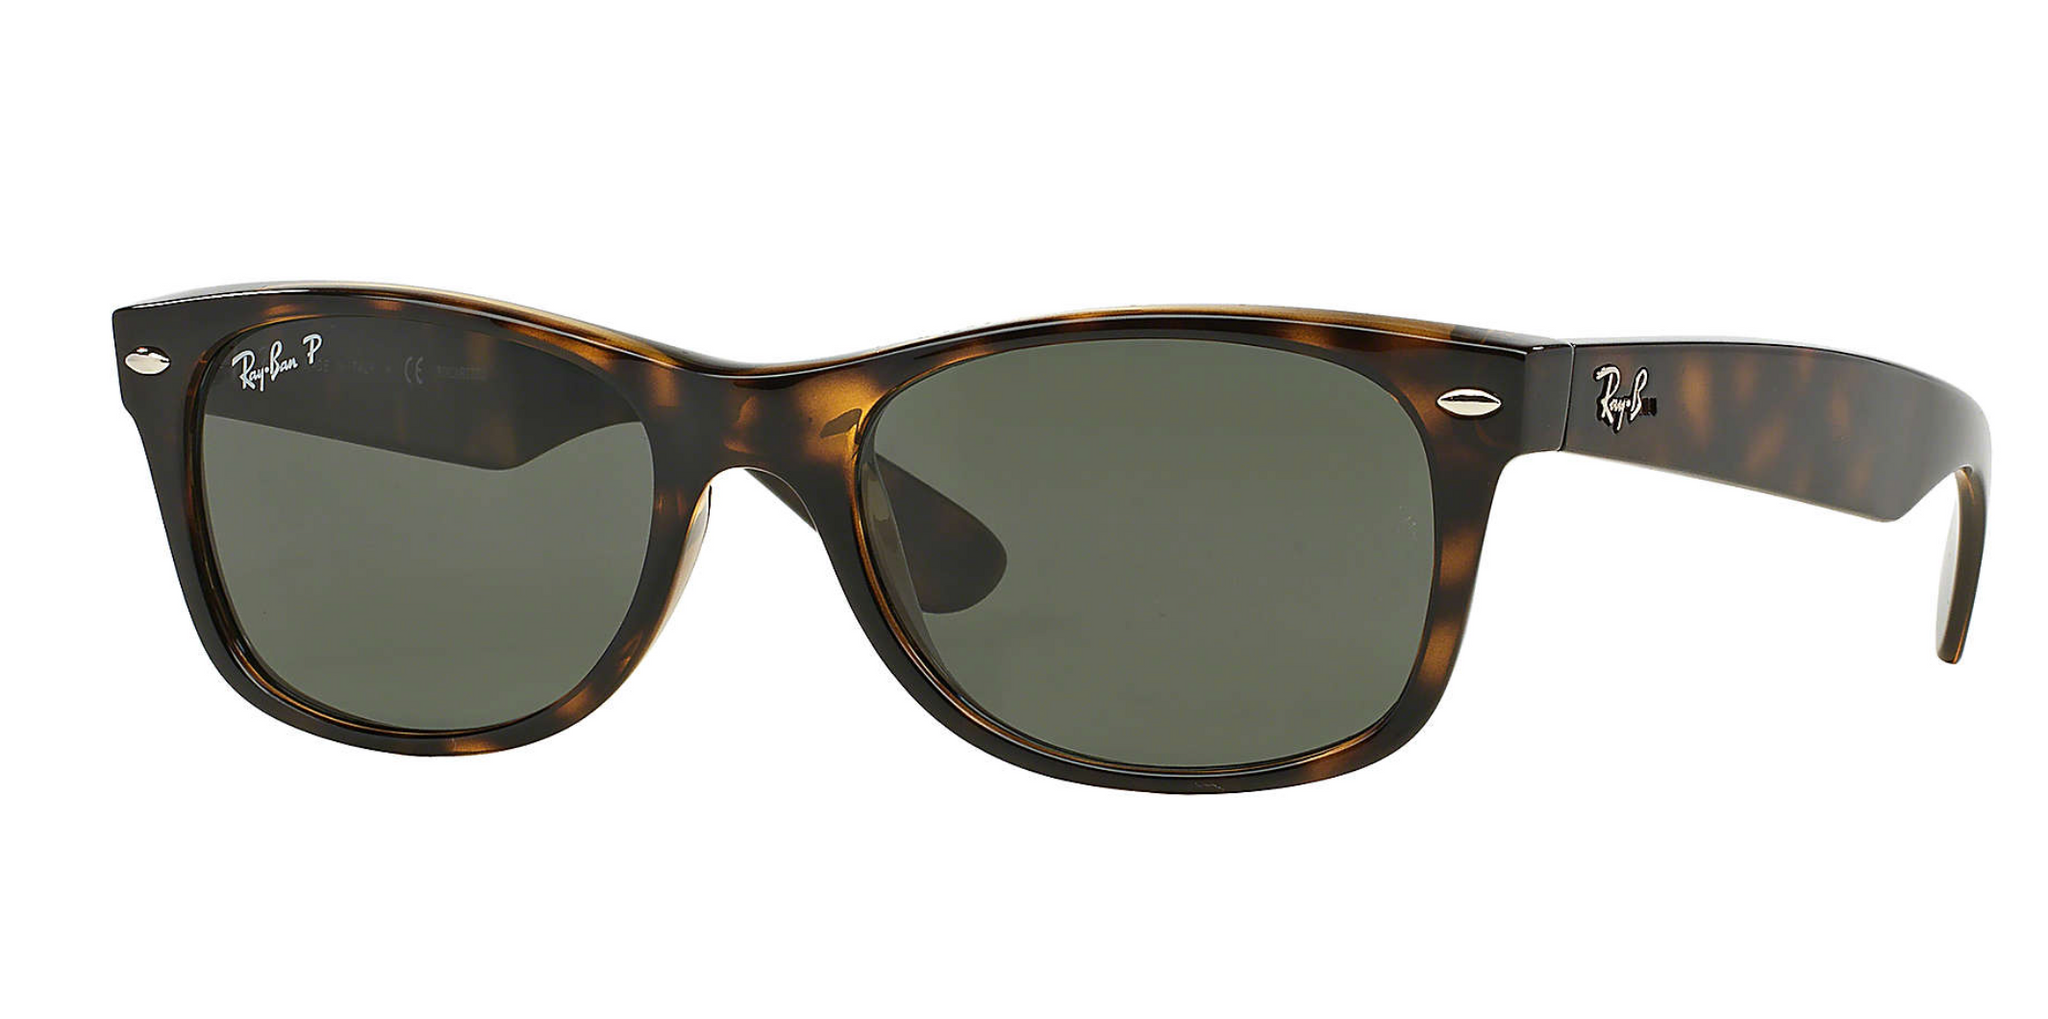 Ray Ban New Wayfarer Tortoise Sunglasses Rb2132 Flight Sunglasses